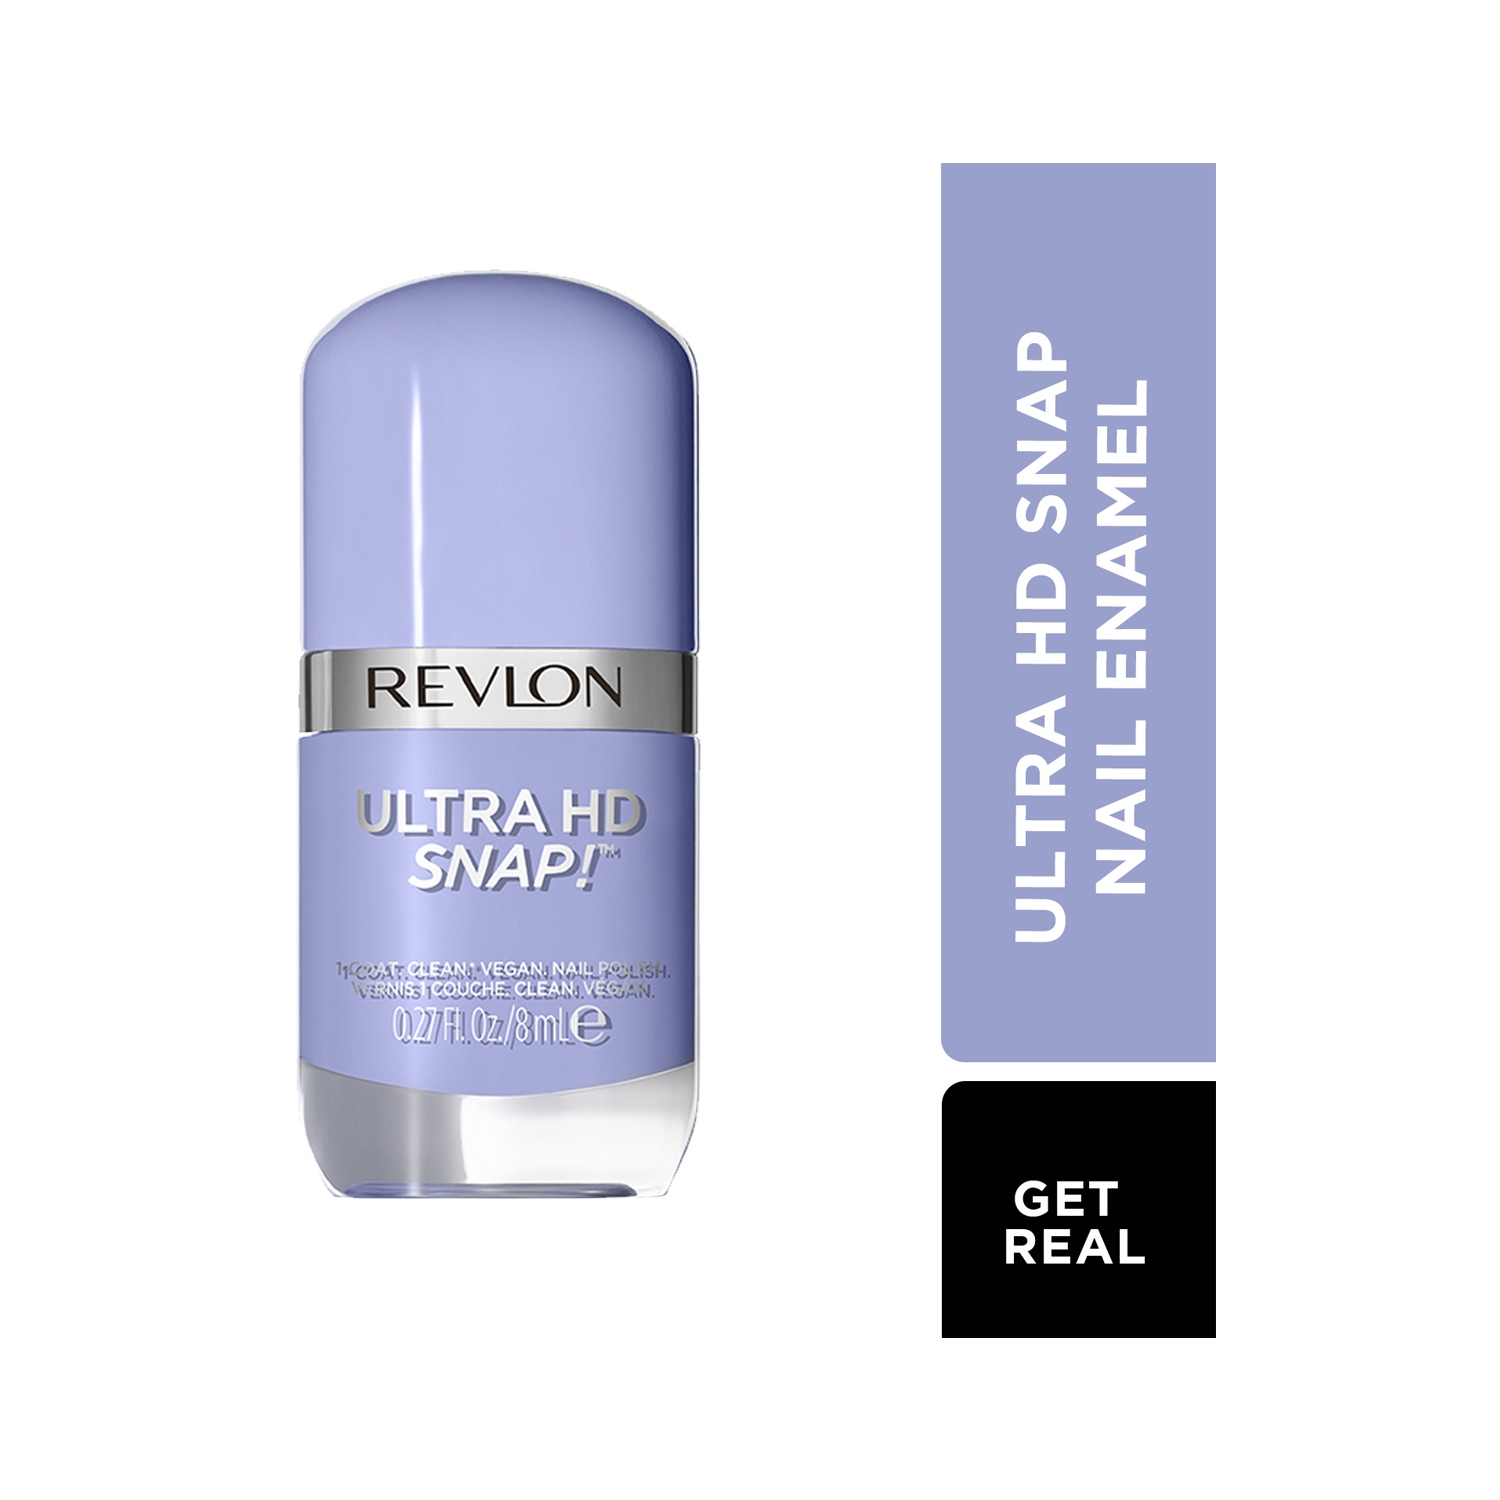 Revlon | Revlon Ultra HD Snap Nail Polish - Get Real (8ml)